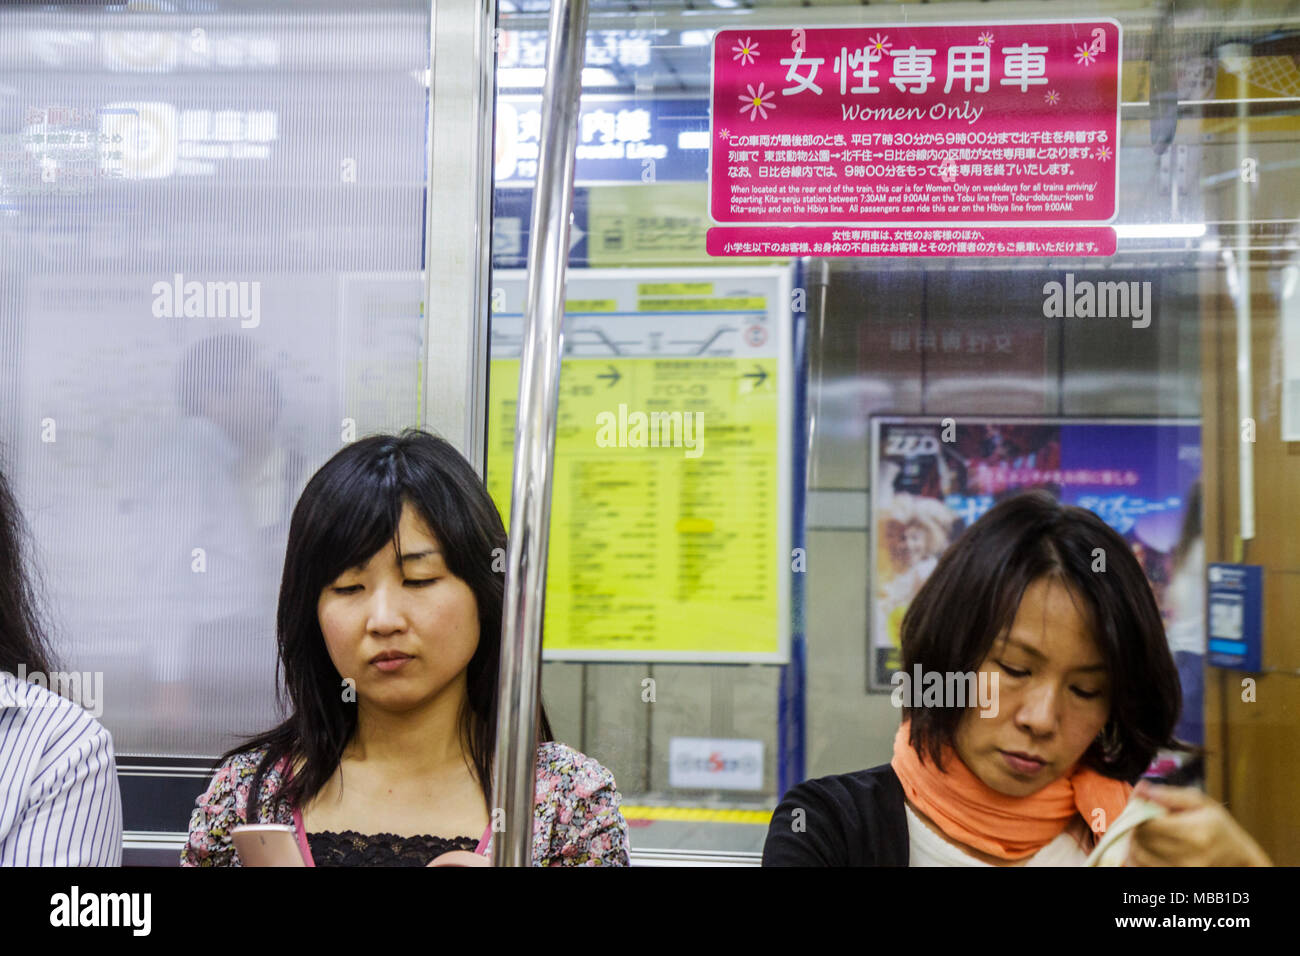 Tokyo Japan,Hibiya,Stazione della linea di Hibiya,macchina per sole donne,Asian Oriental,donna donne adulte adulti,kanji,hiragana,personaggi,simboli,Giapponese & Inglese Foto Stock